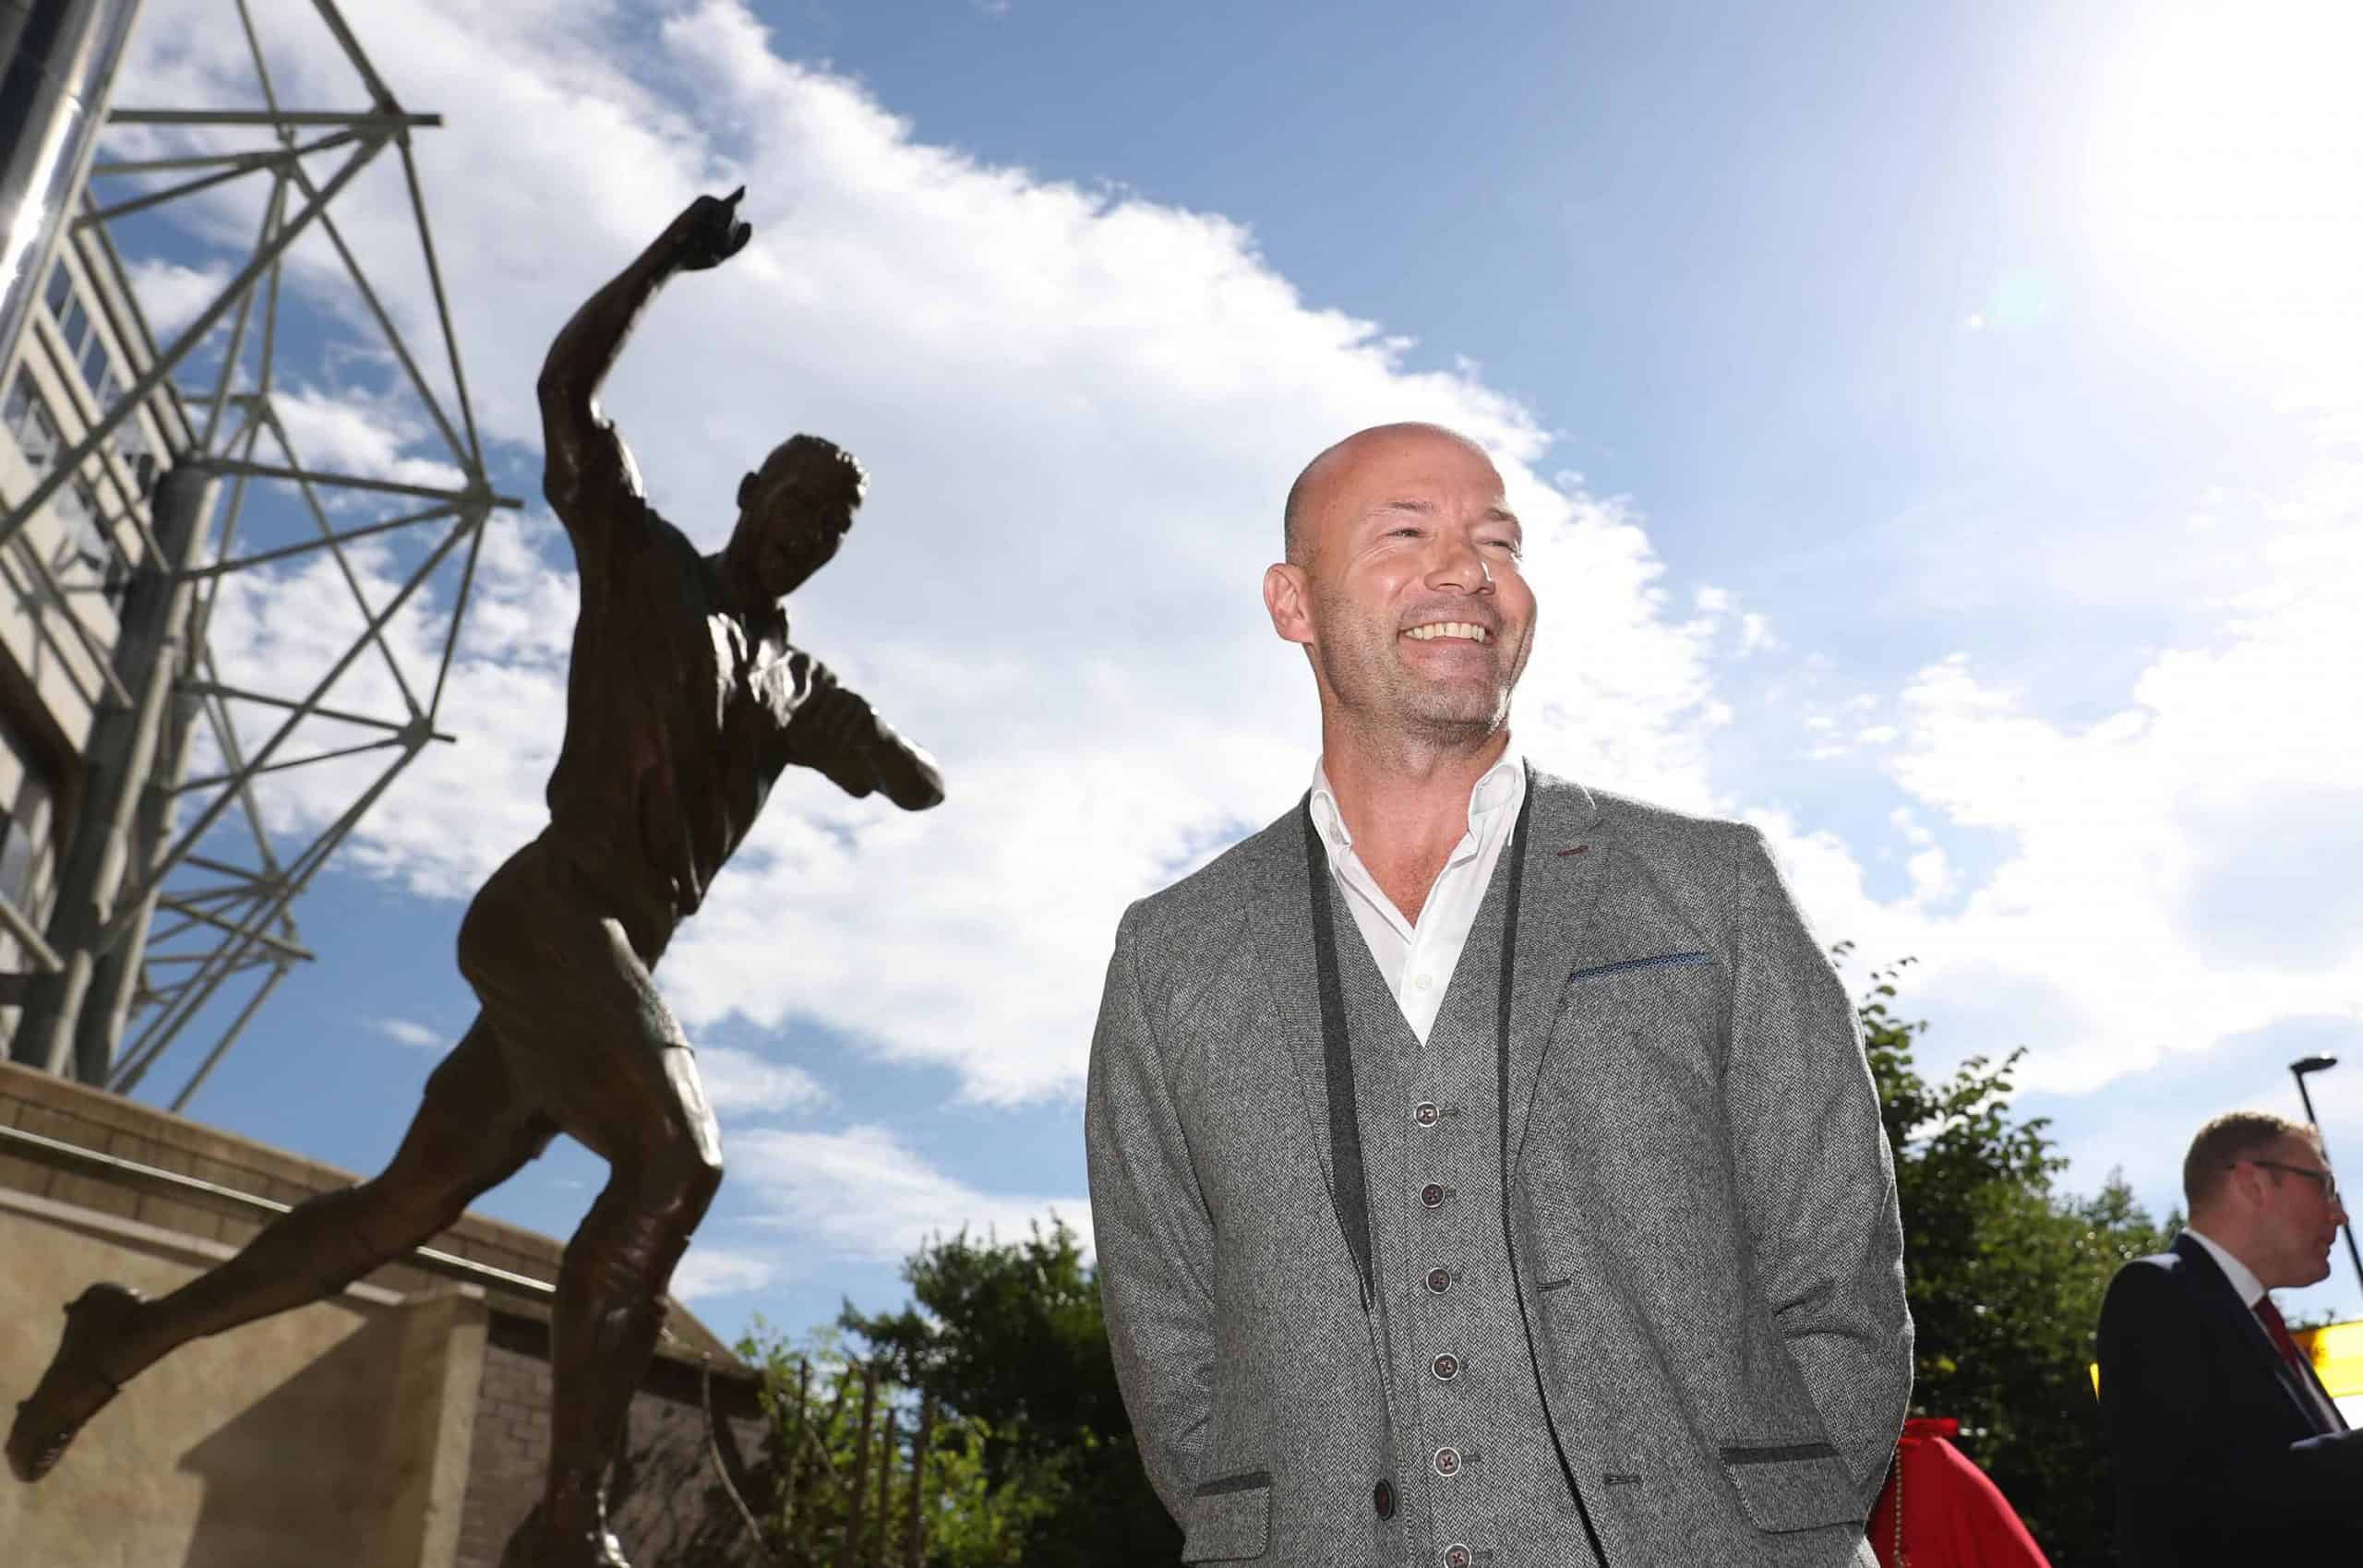 Newcastle United legend to receive University honour